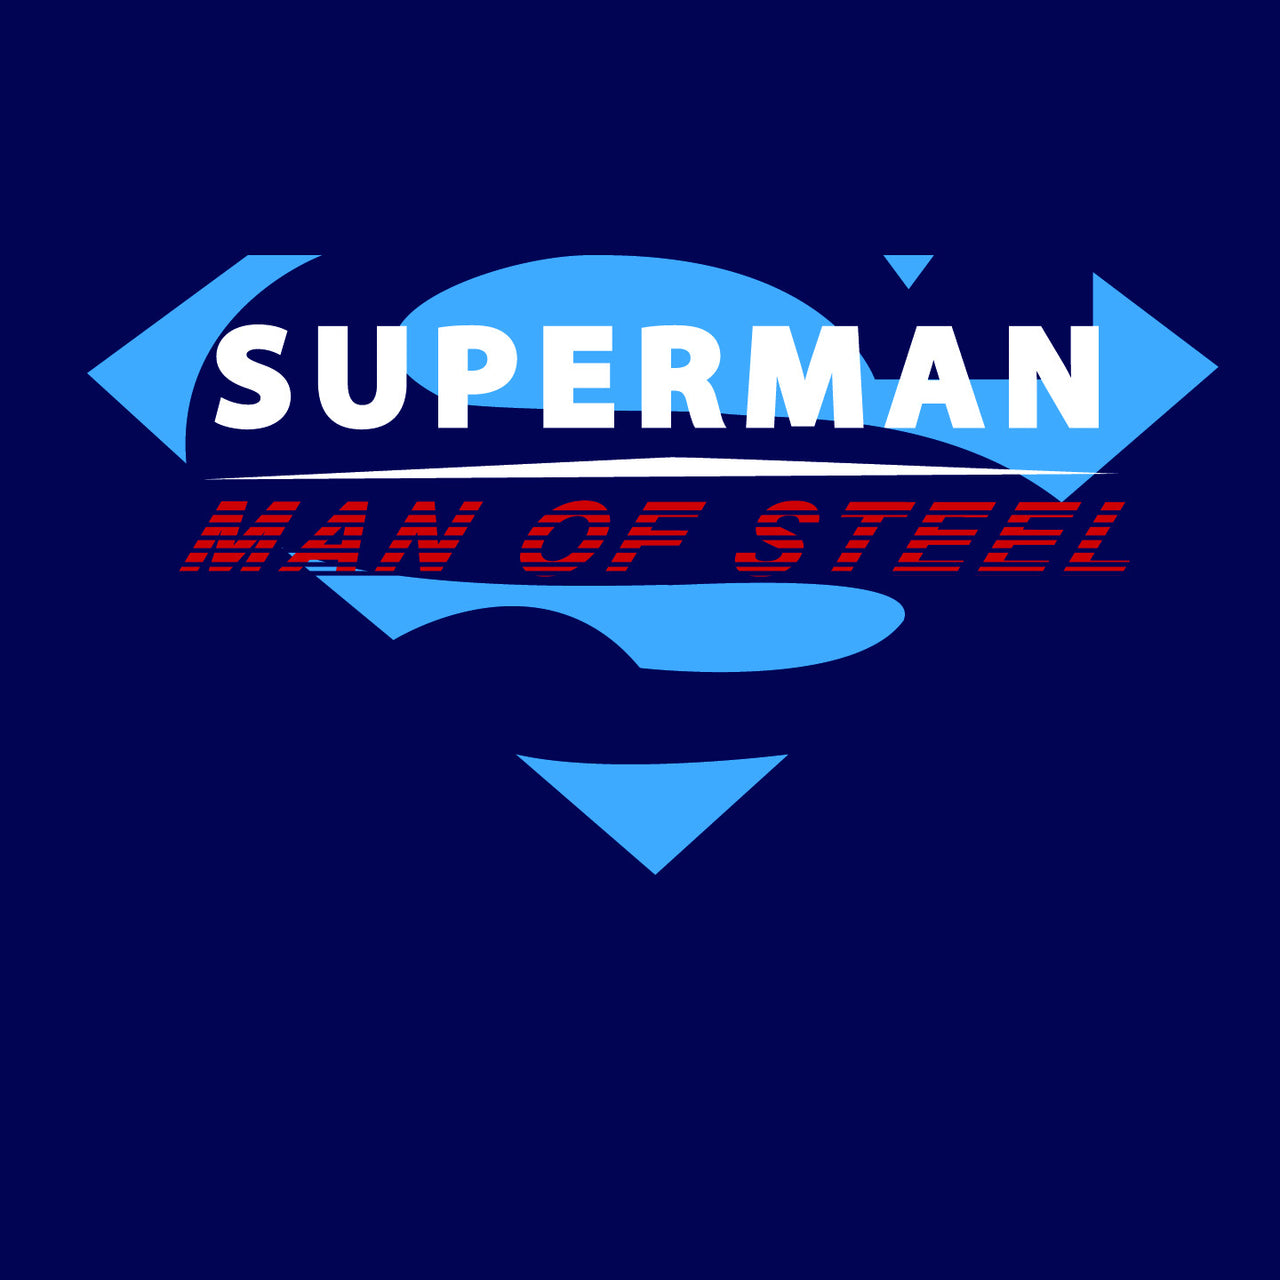 Superman Man of Steel Logo on Navy Colored Tank top for Men - TshirtNow.net - 2